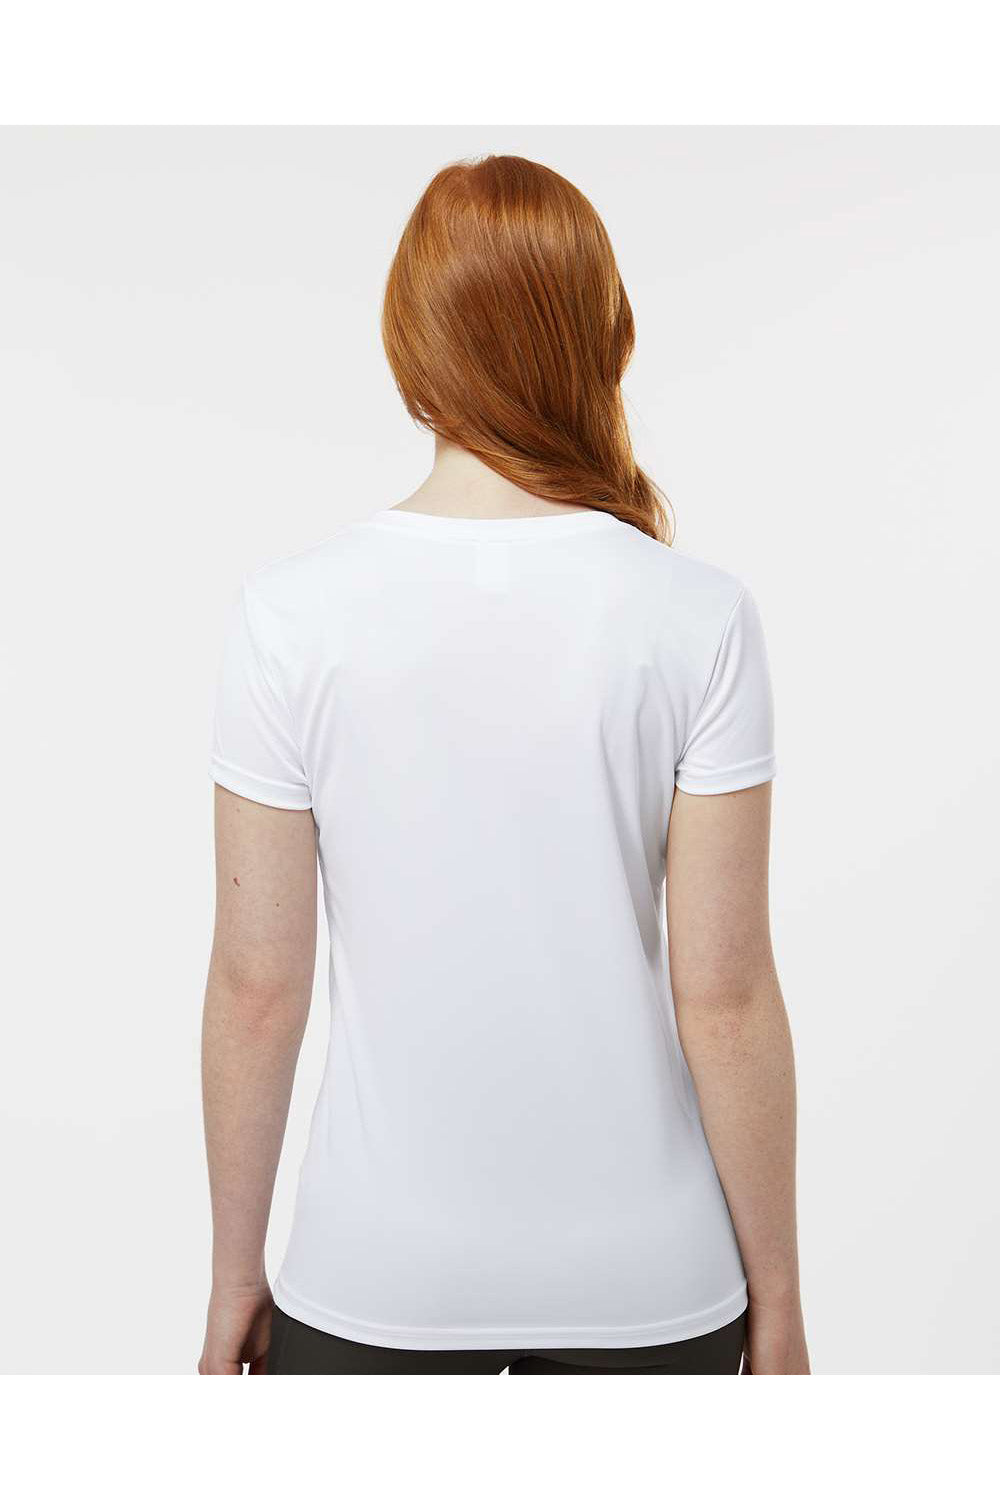 Paragon 203 Womens Vera Short Sleeve V-Neck T-Shirt White Model Back